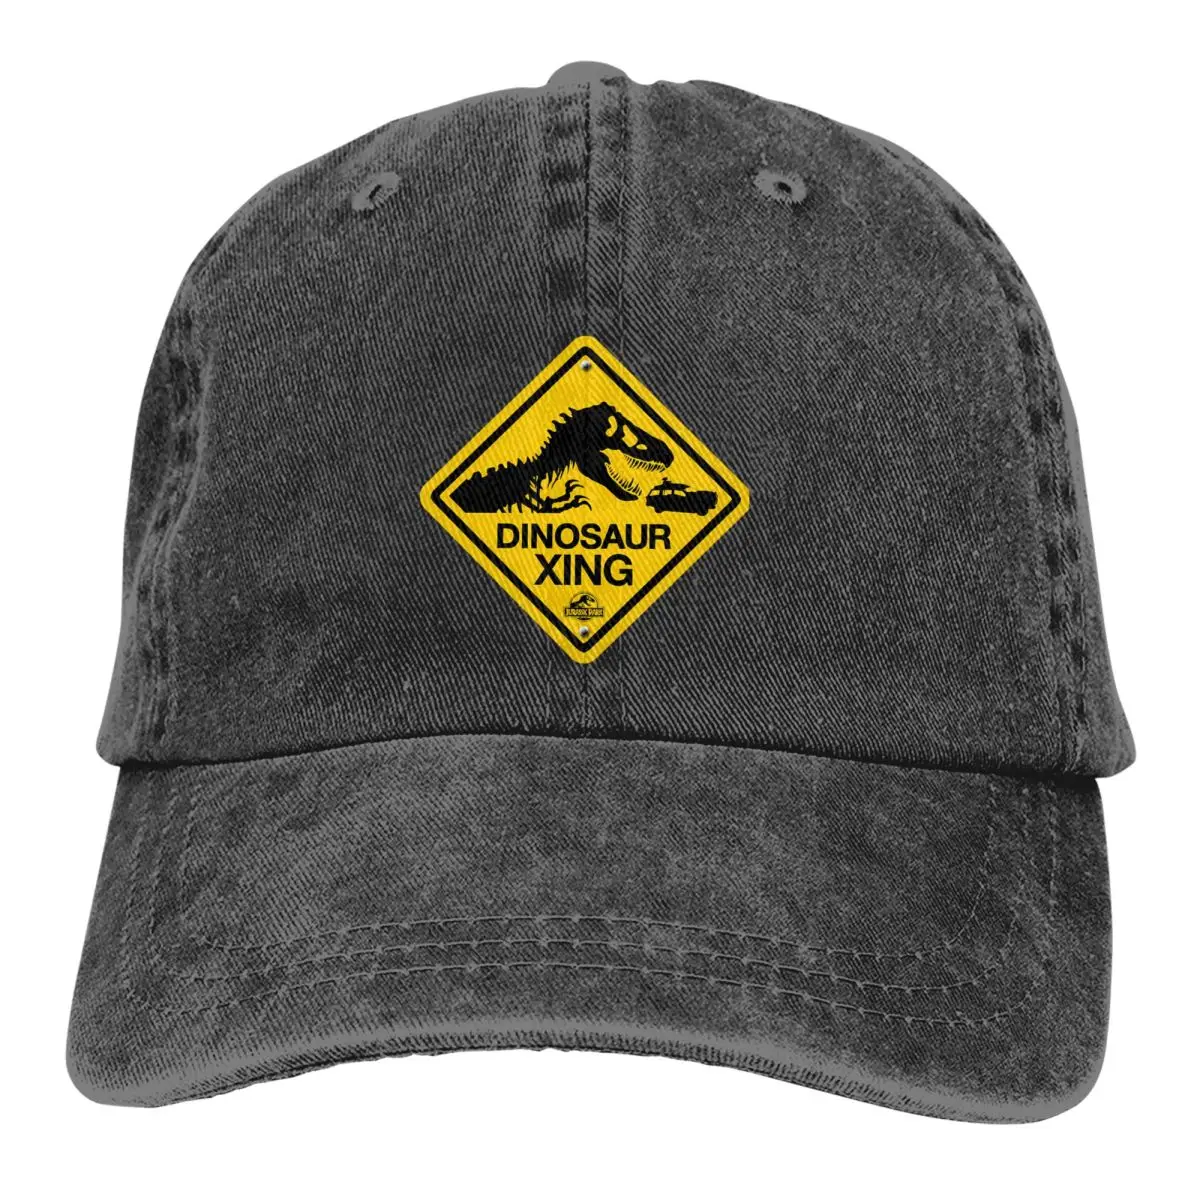 

Dinosaur Crossing Road Sign Baseball Caps Peaked Cap Jurassic Park Film Sun Shade Hats for Men